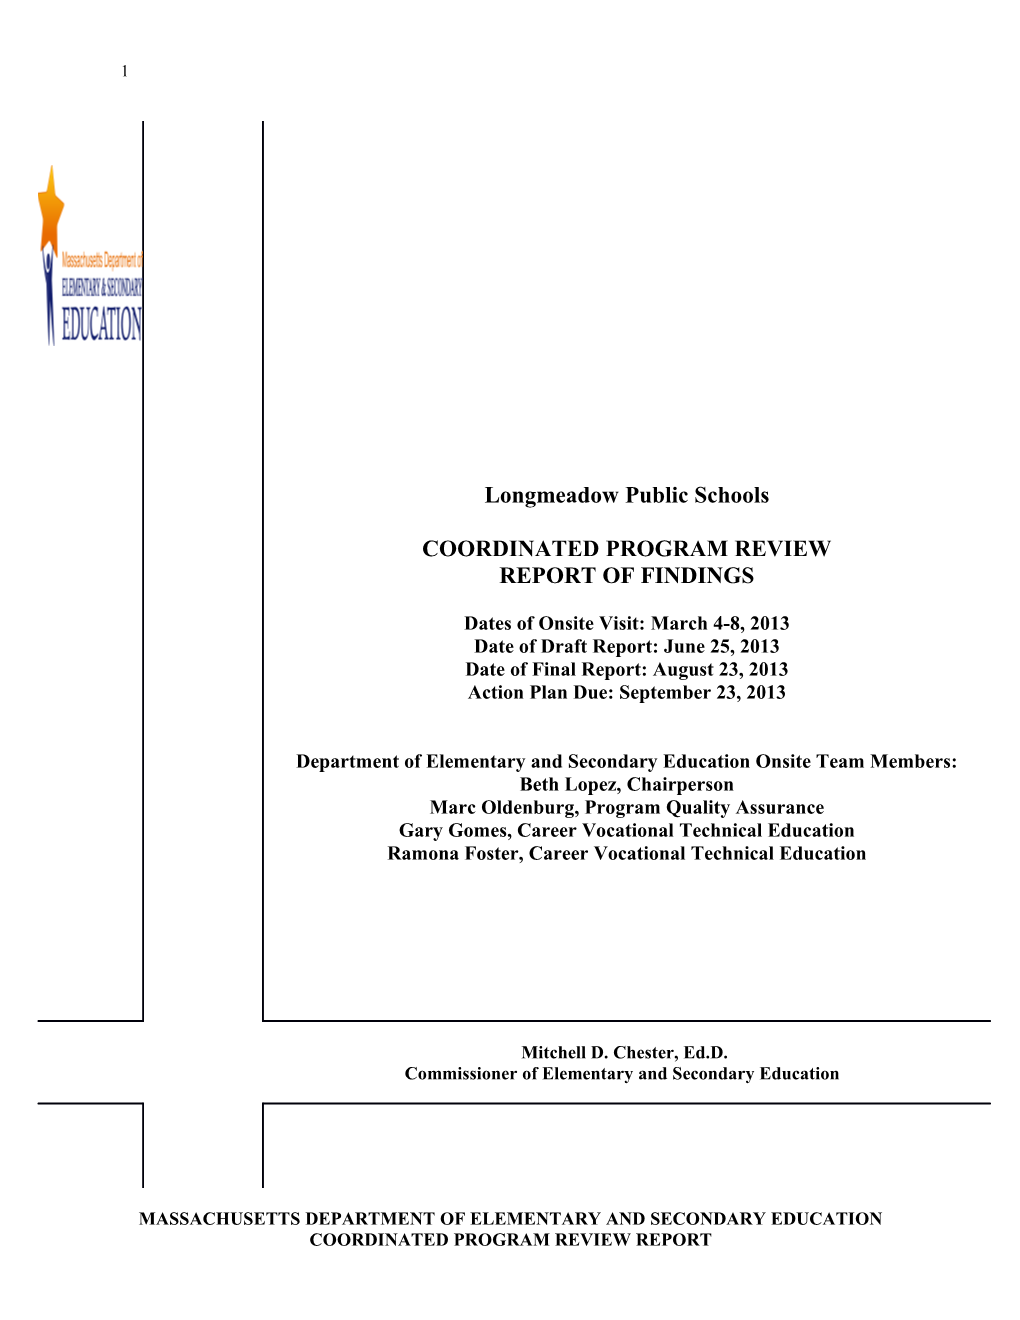 Longmeadow Public Schools CPR Final Report 2013